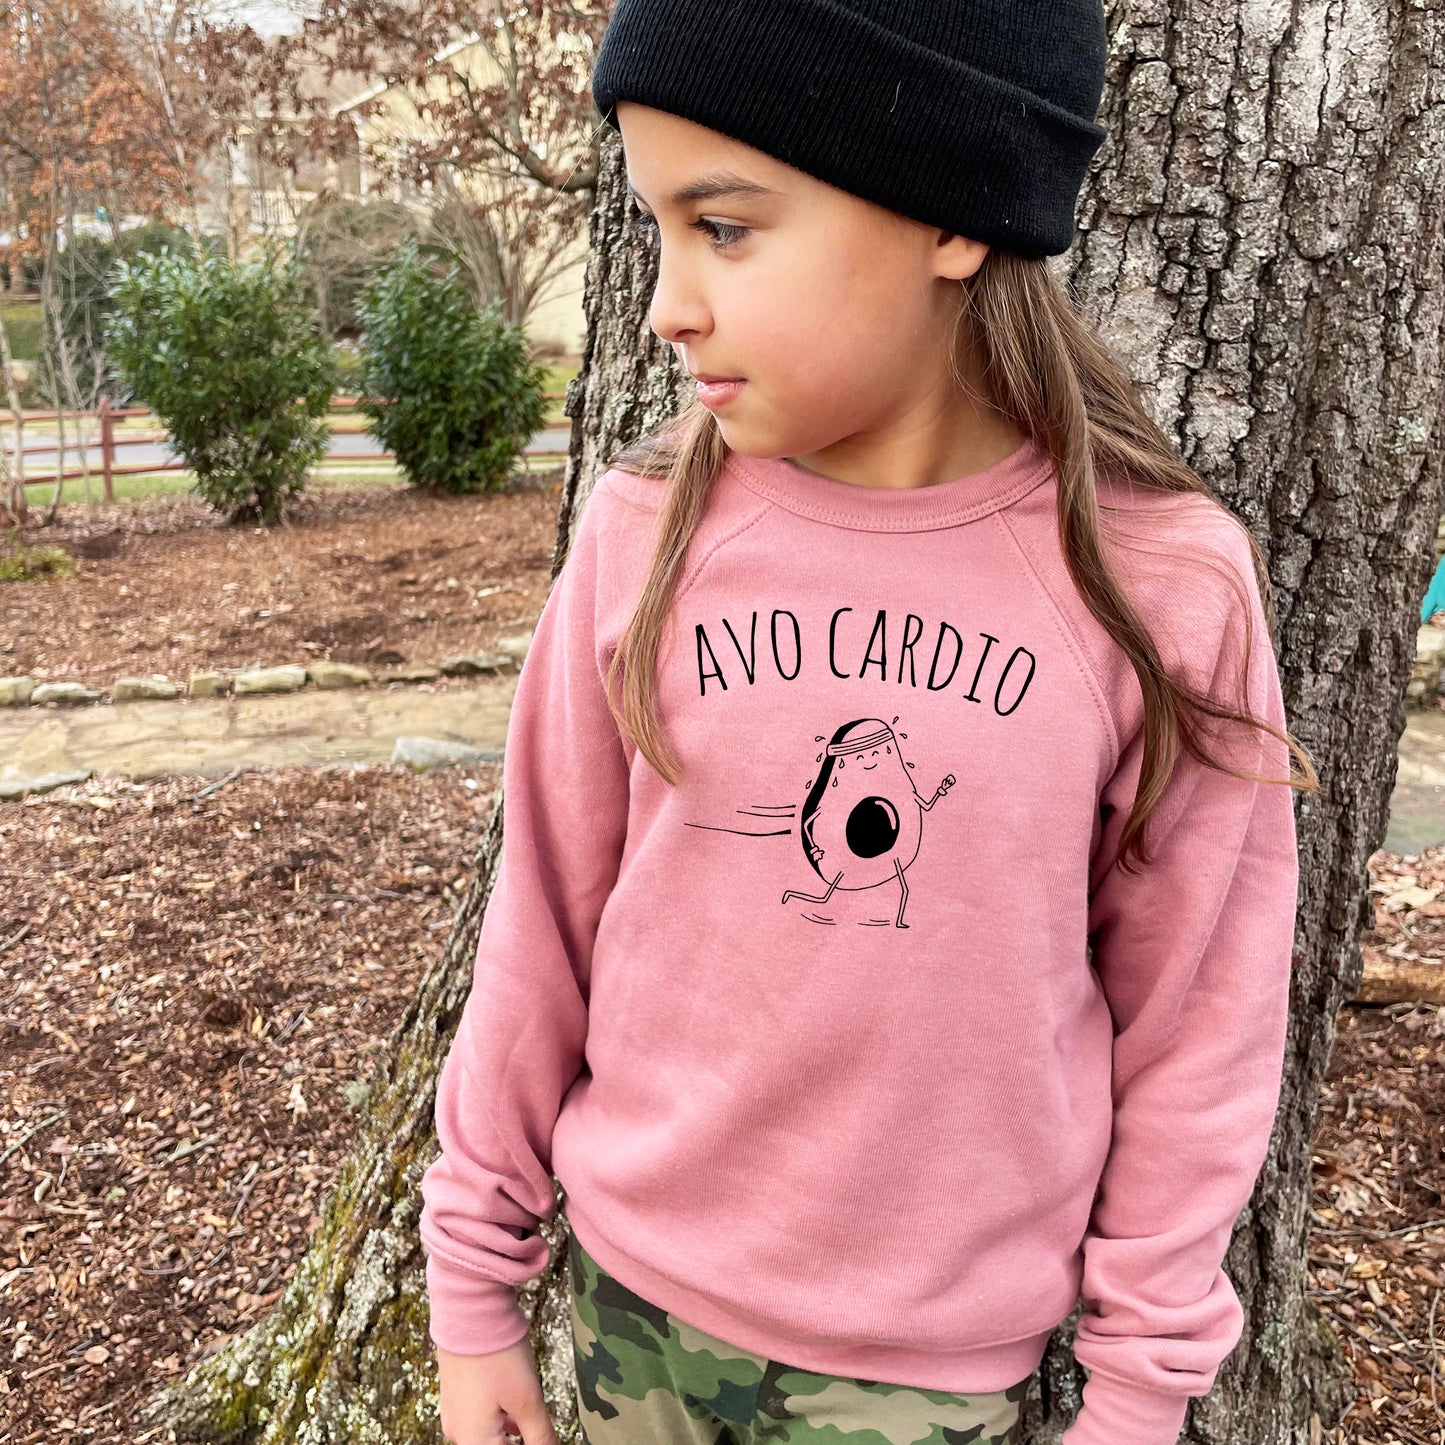 Avo Cardio (Avocado) - Kid's Sweatshirt - Heather Gray or Mauve